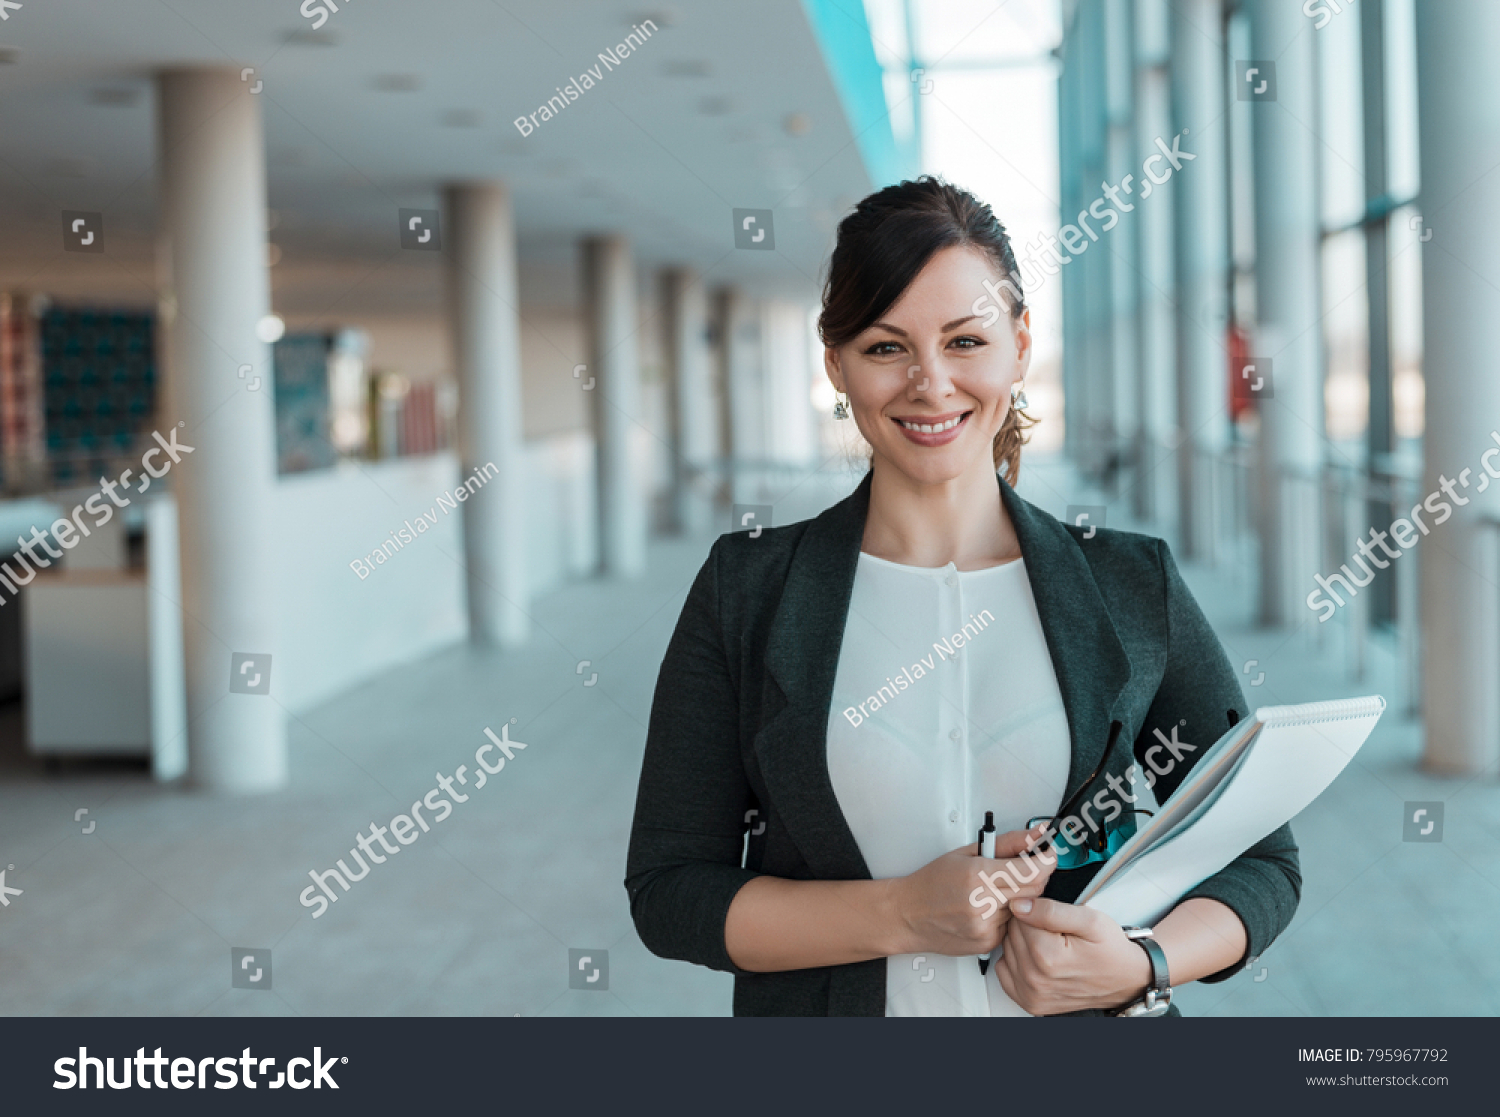 Businesswoman hold documents Ащдв photos